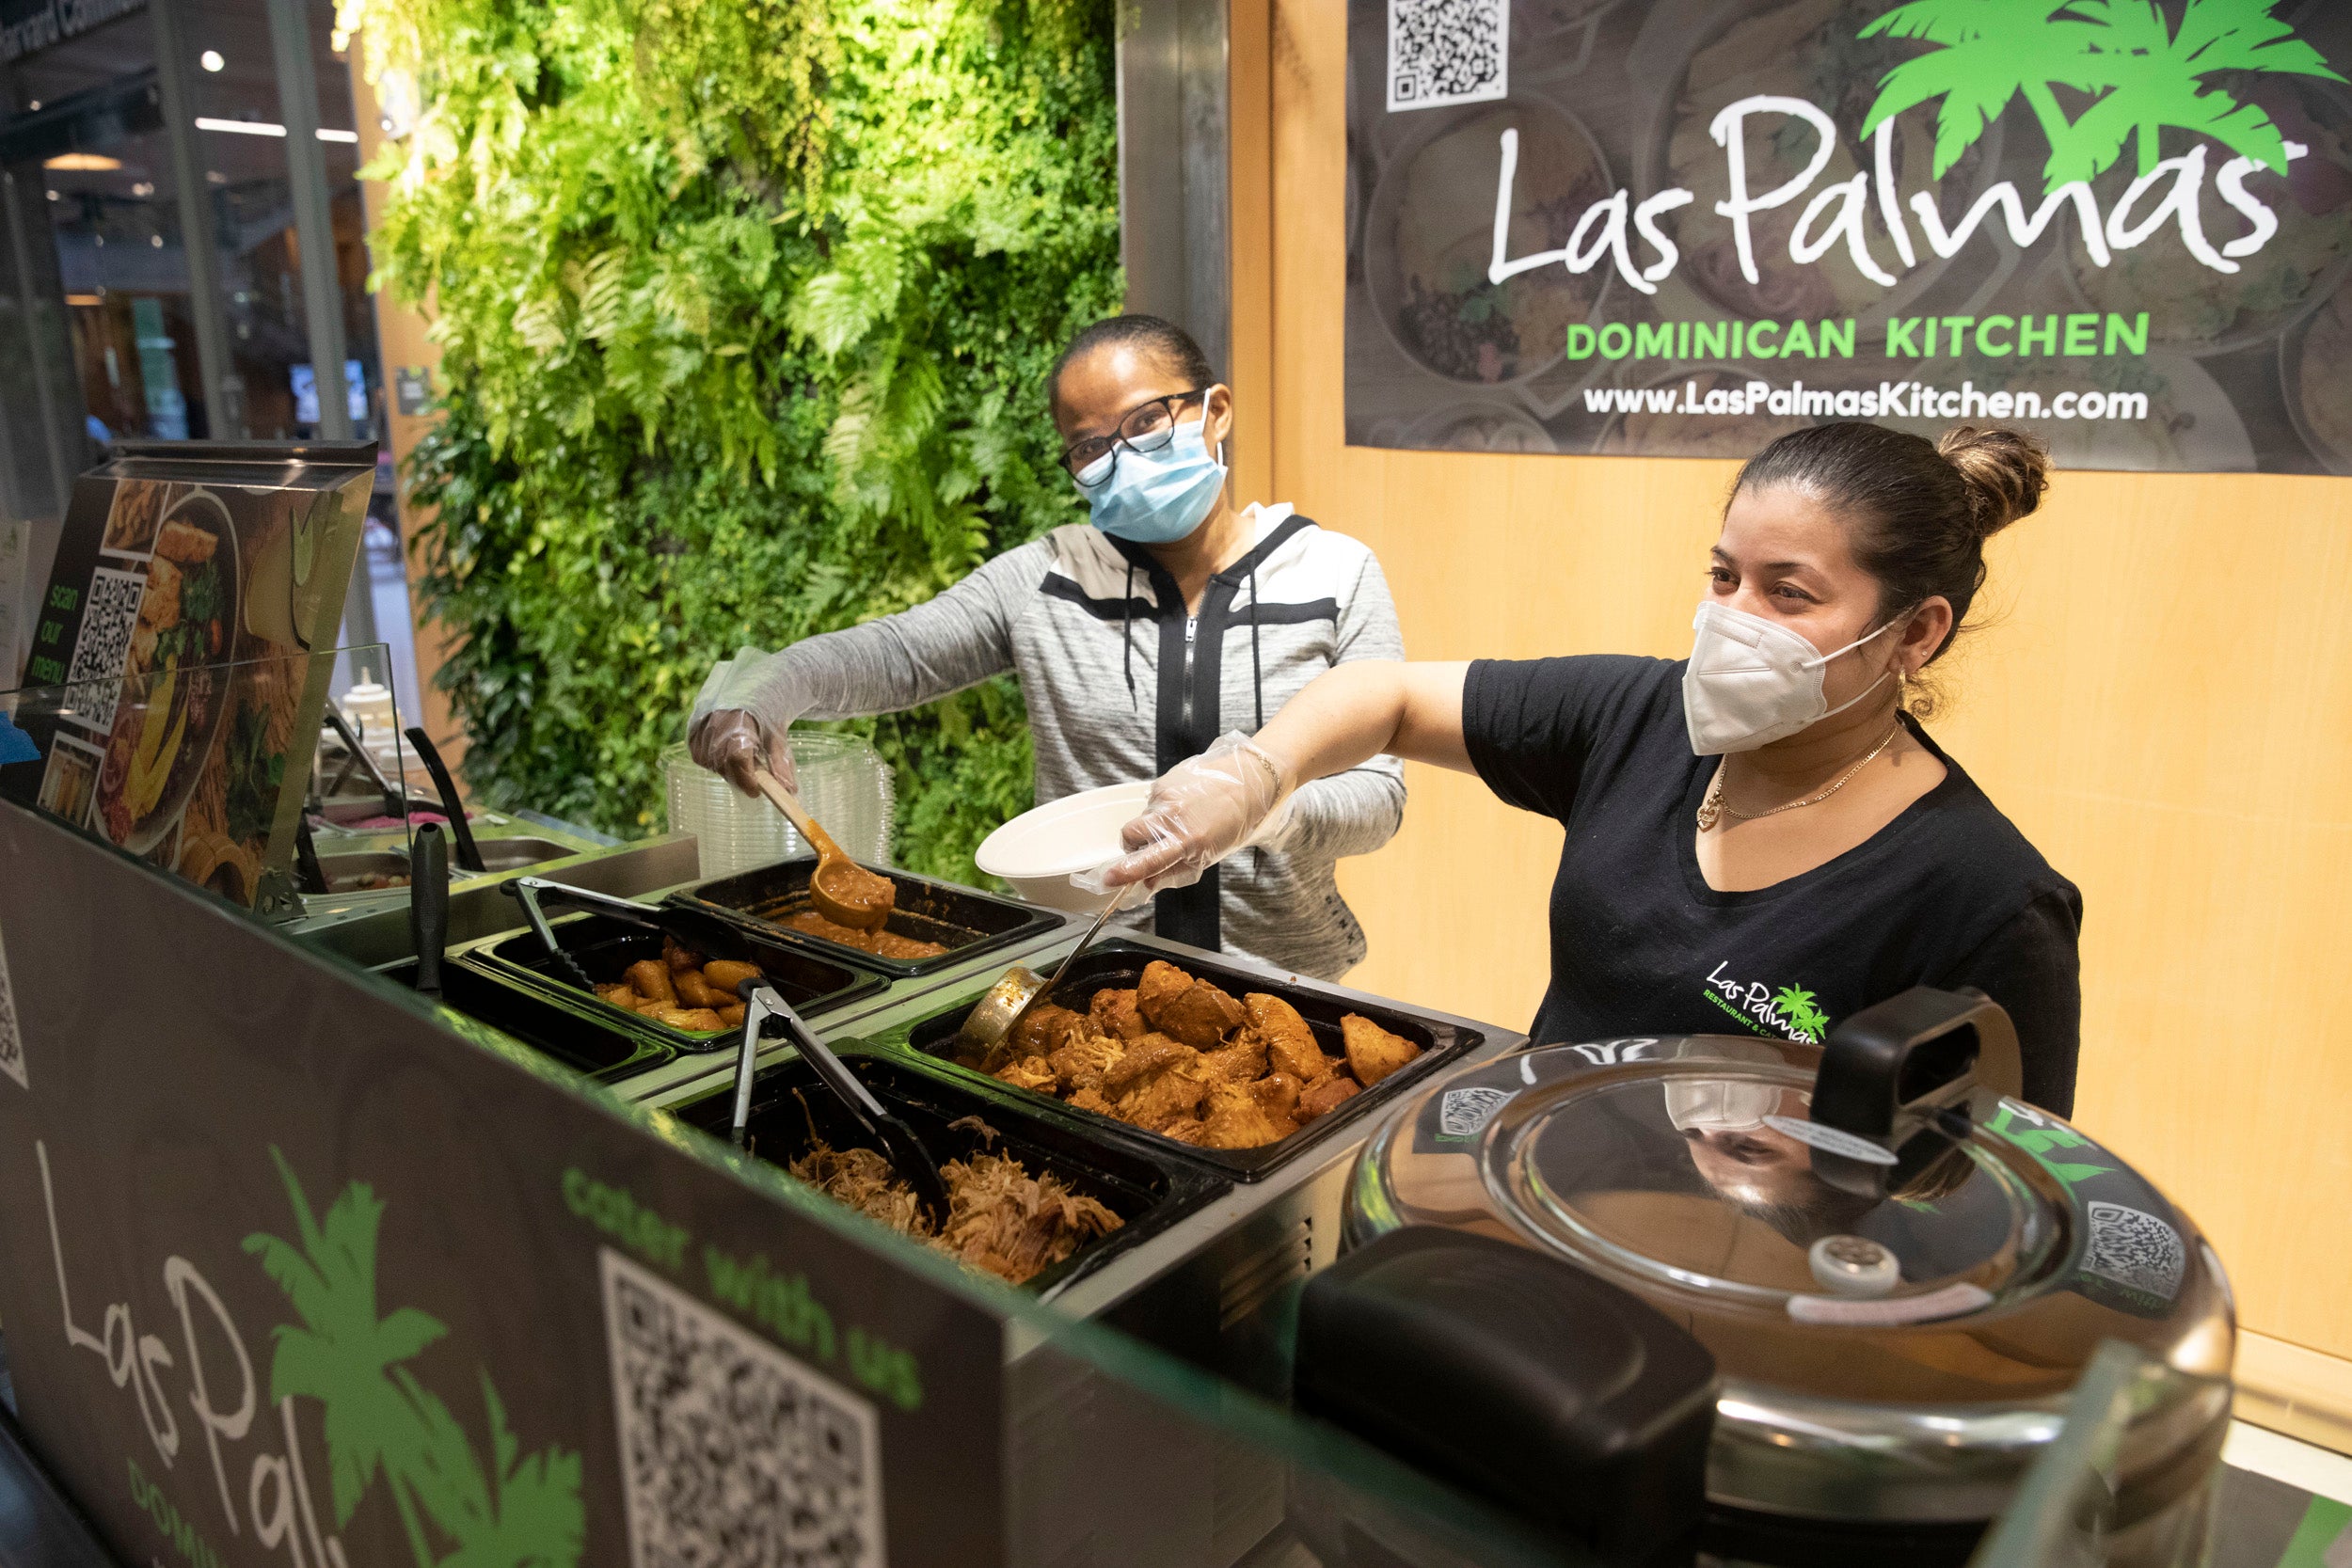 Maritza Hernandez (left) and Delores Martinez showcase Las Palmas’ featured fare